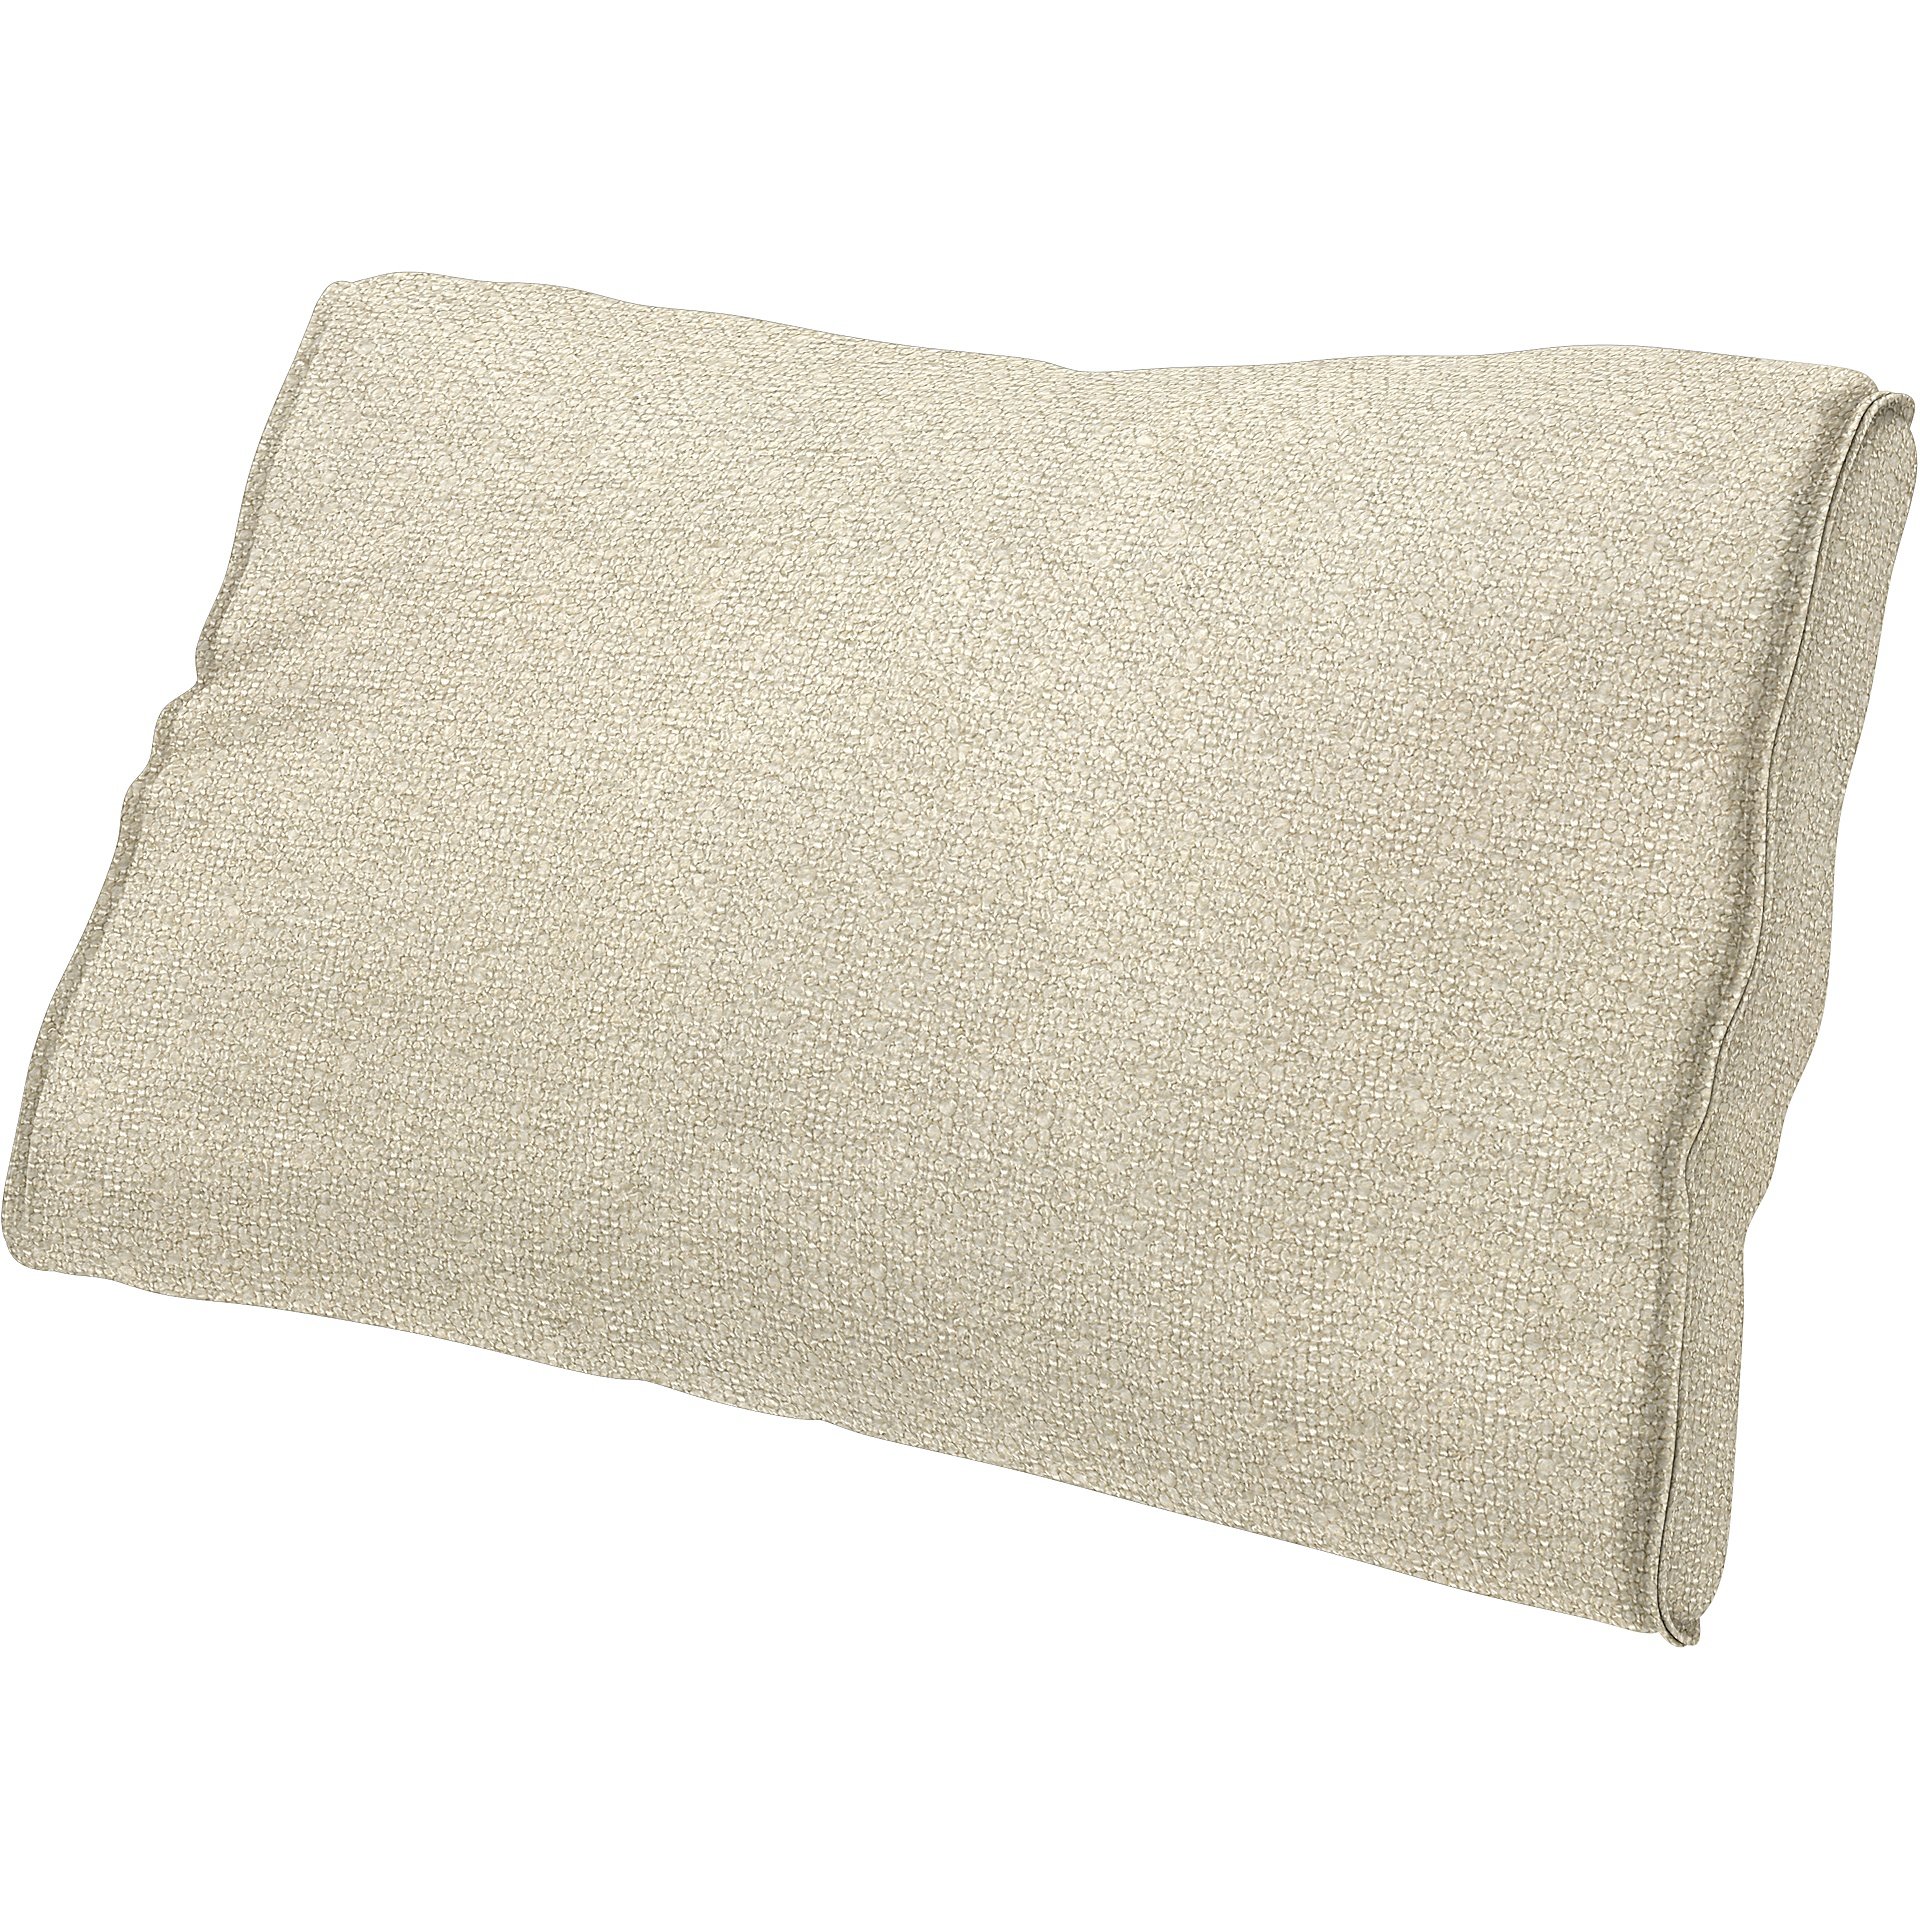 IKEA - Lumbar cushion cover Farlov Loose fit, Cream, Boucle & Texture - Bemz